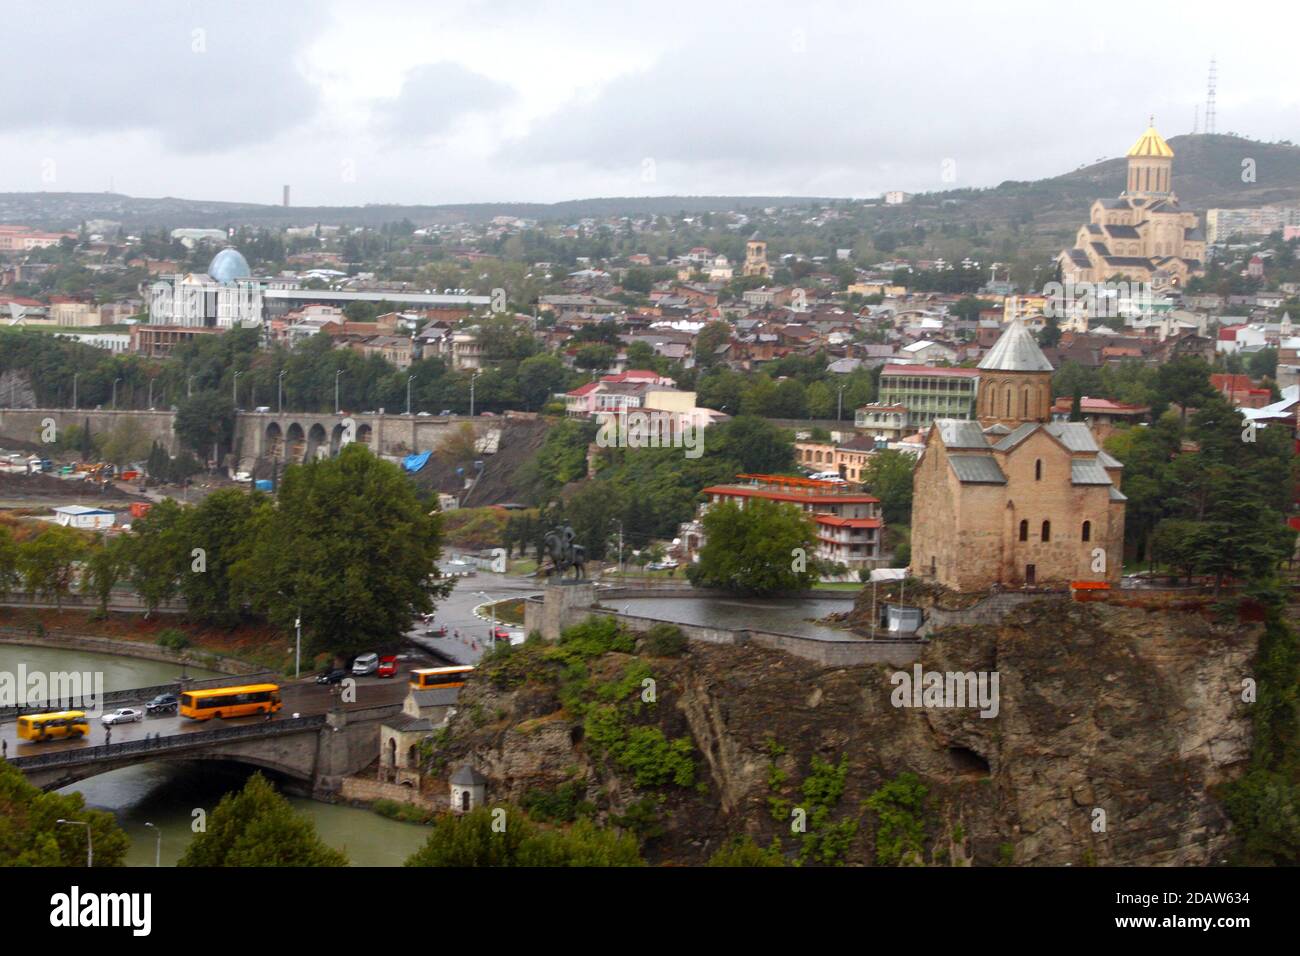 Nice view of Tbilisi, Georgia Stock Photo